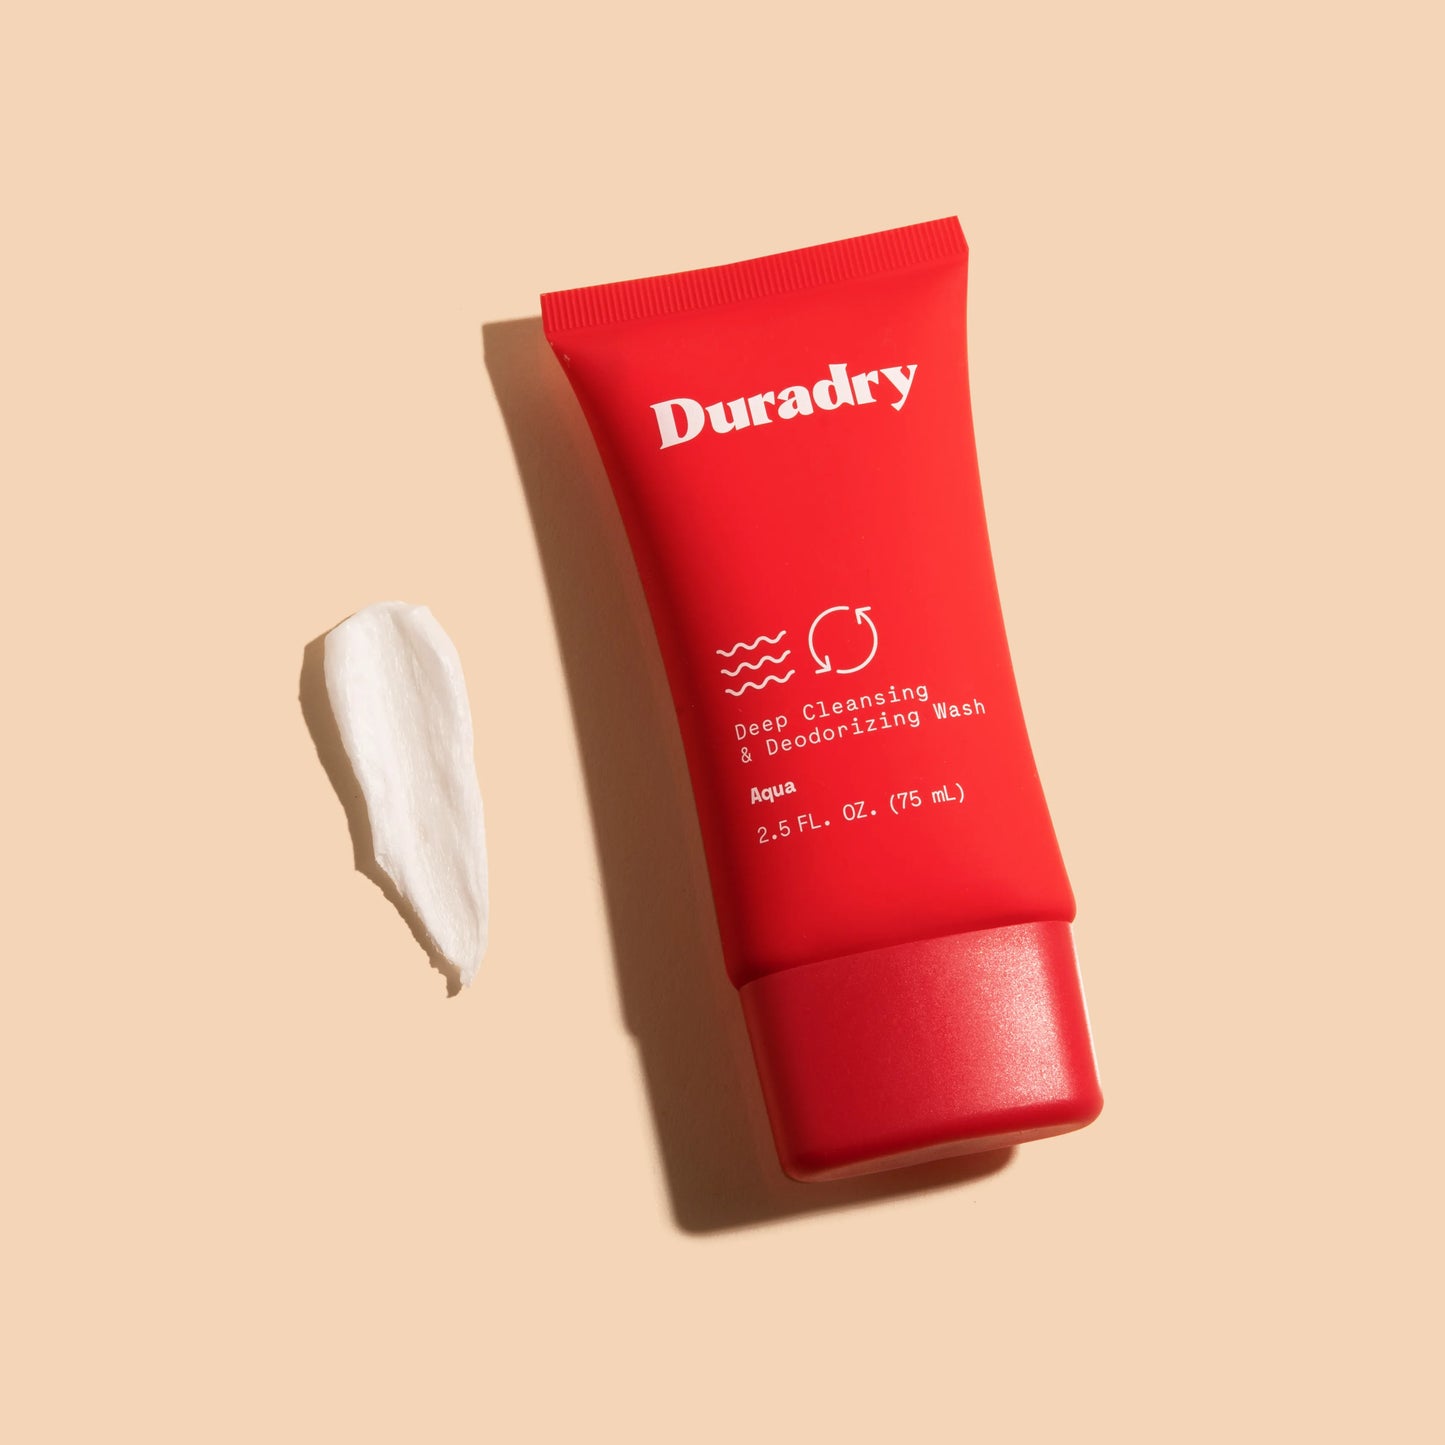 Duradry Wash by Duradry